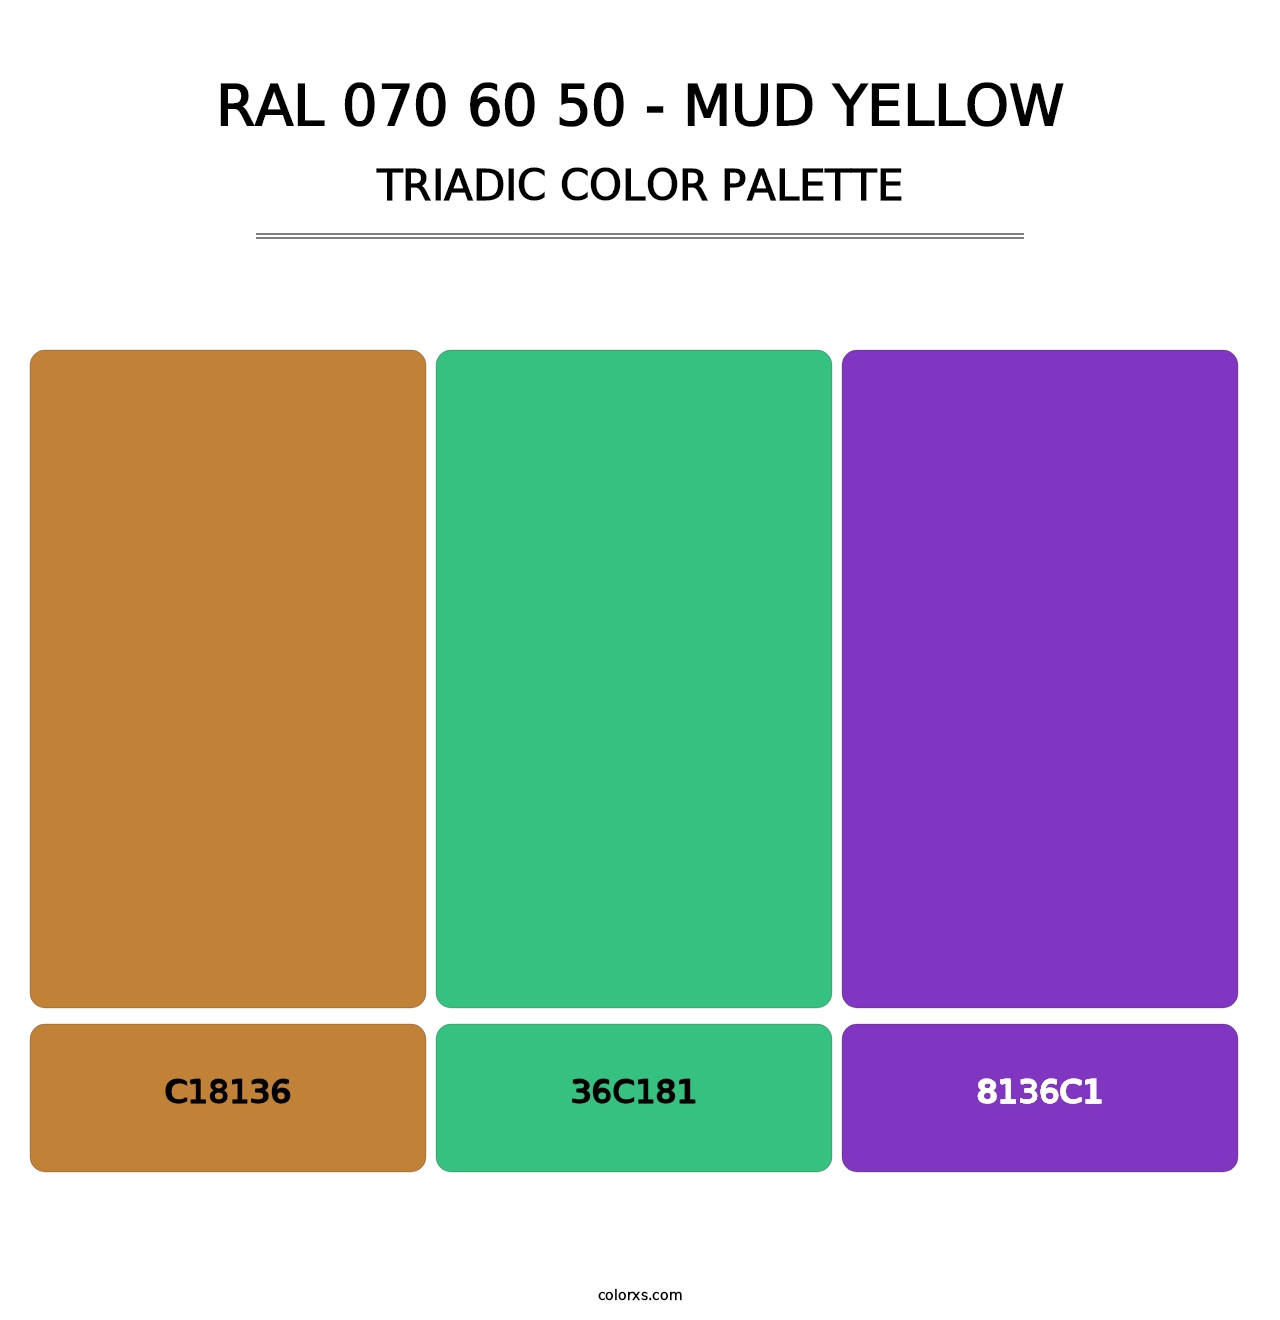 RAL 070 60 50 - Mud Yellow - Triadic Color Palette